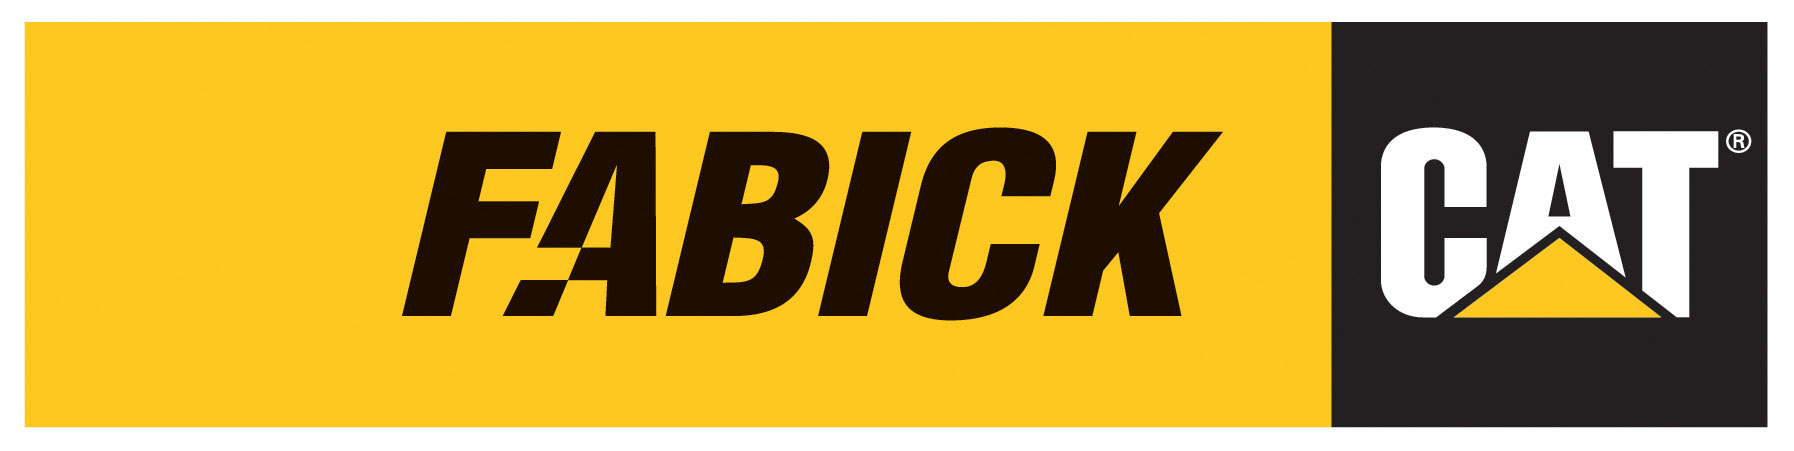 Fabick Cat company logo